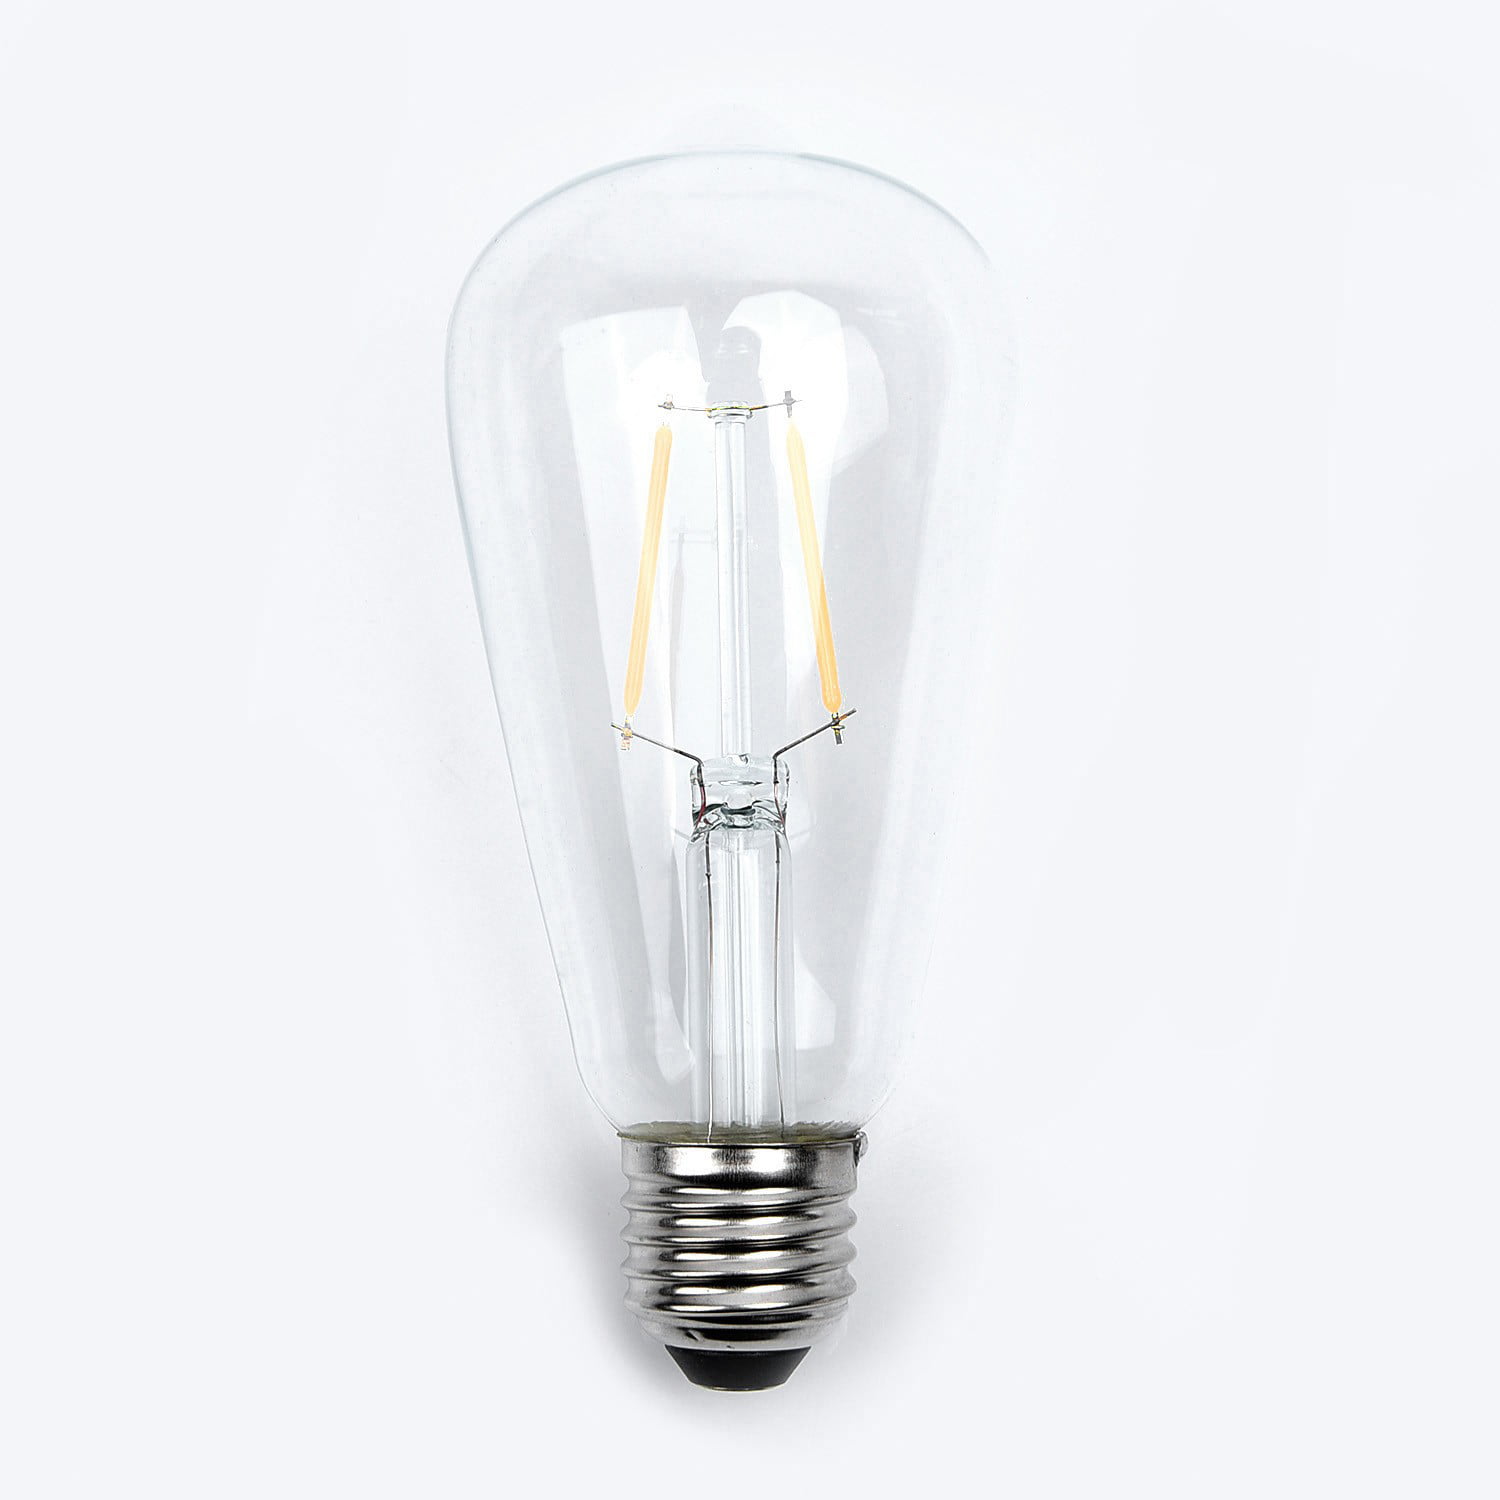 QXKE LED Filament Light Bulb 2W-8W Edison ST64 E27 Vintage Screw Non-Dimmable, Yellow White - Walmart.com